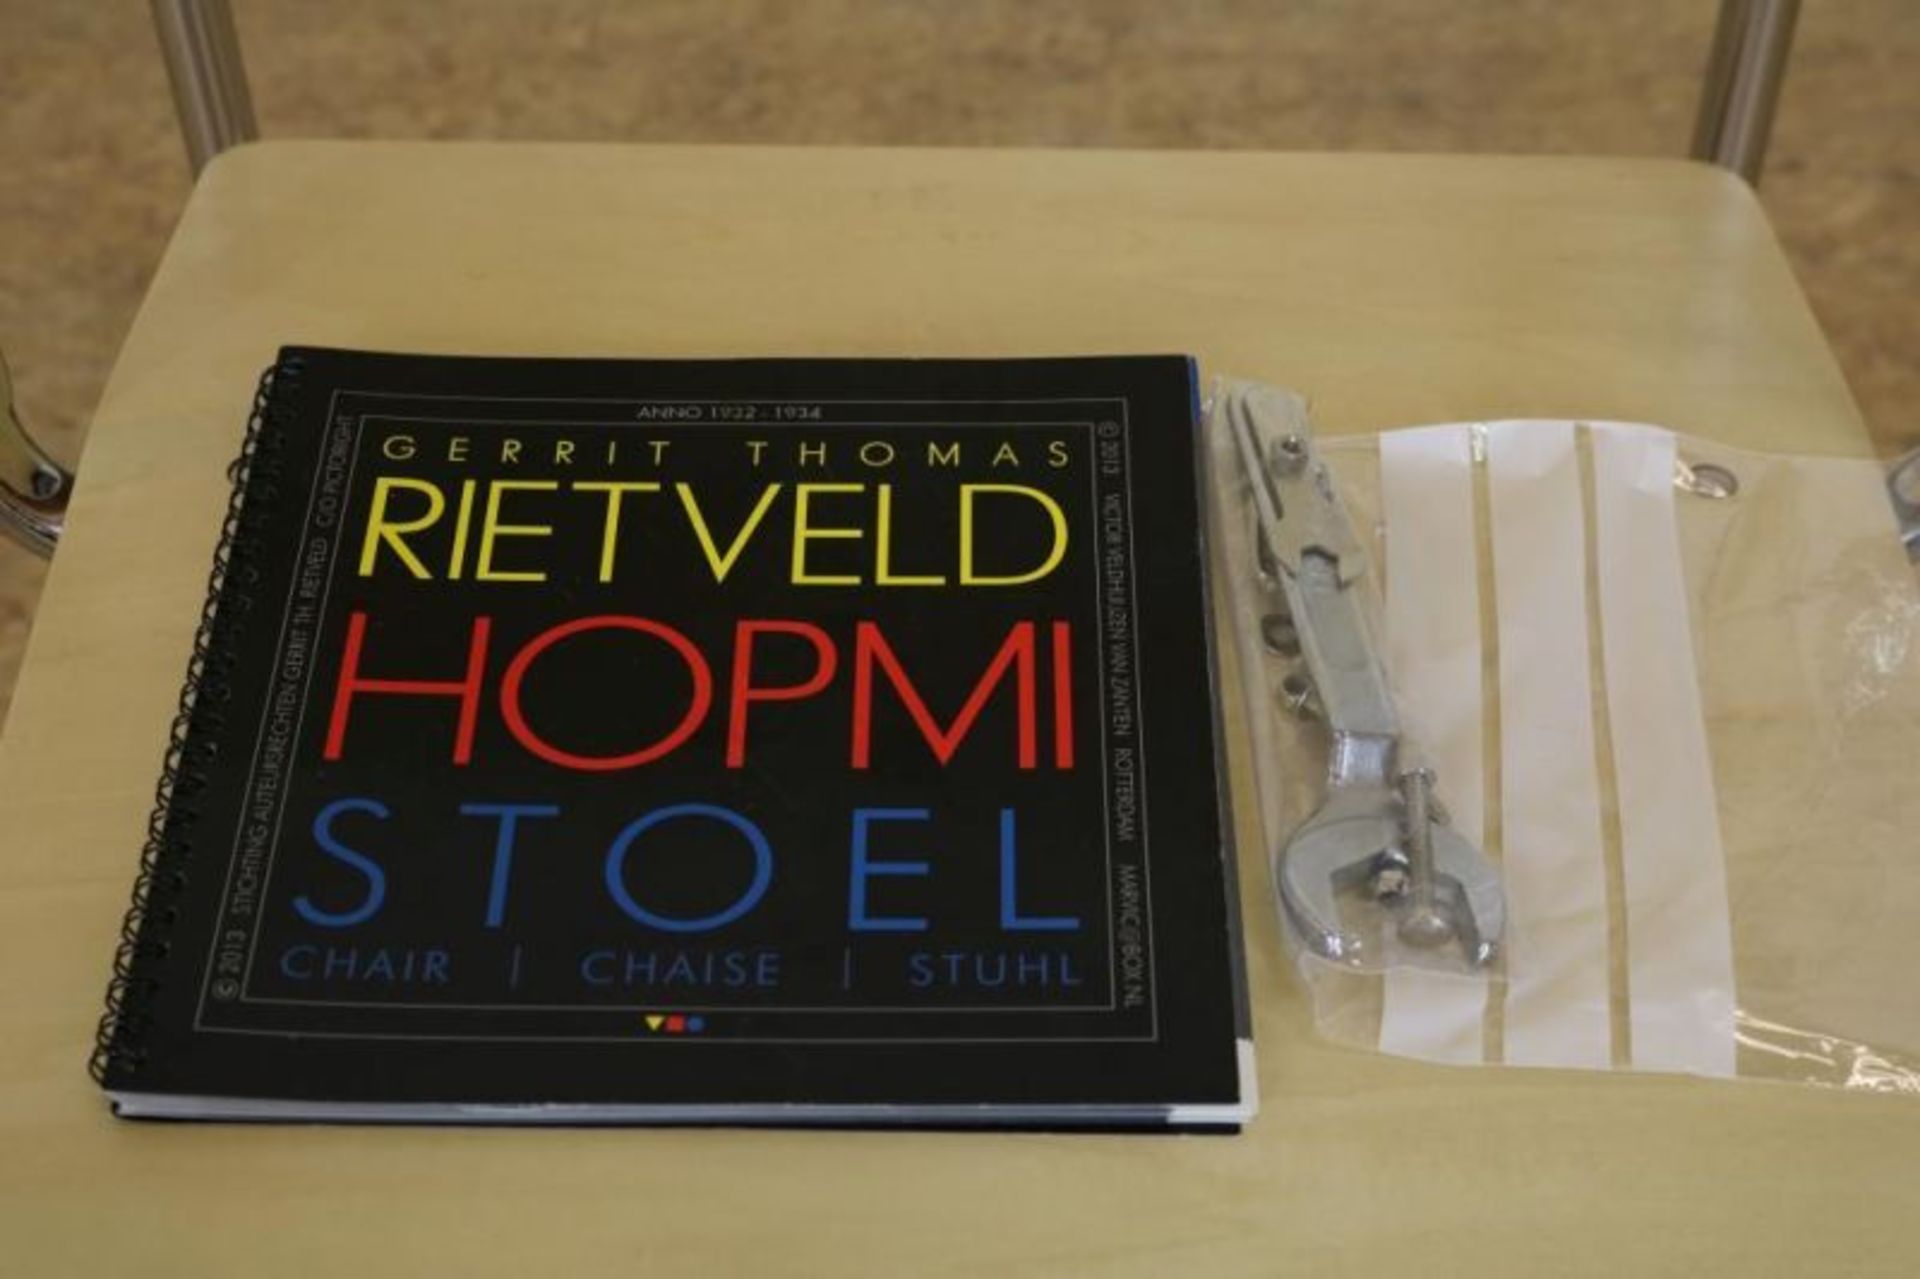 Deels metalen en plywood design Hopmi stoel, naar ontwerper Gerrit Rietveld, Nr. 145/150, gedat. - Bild 4 aus 4